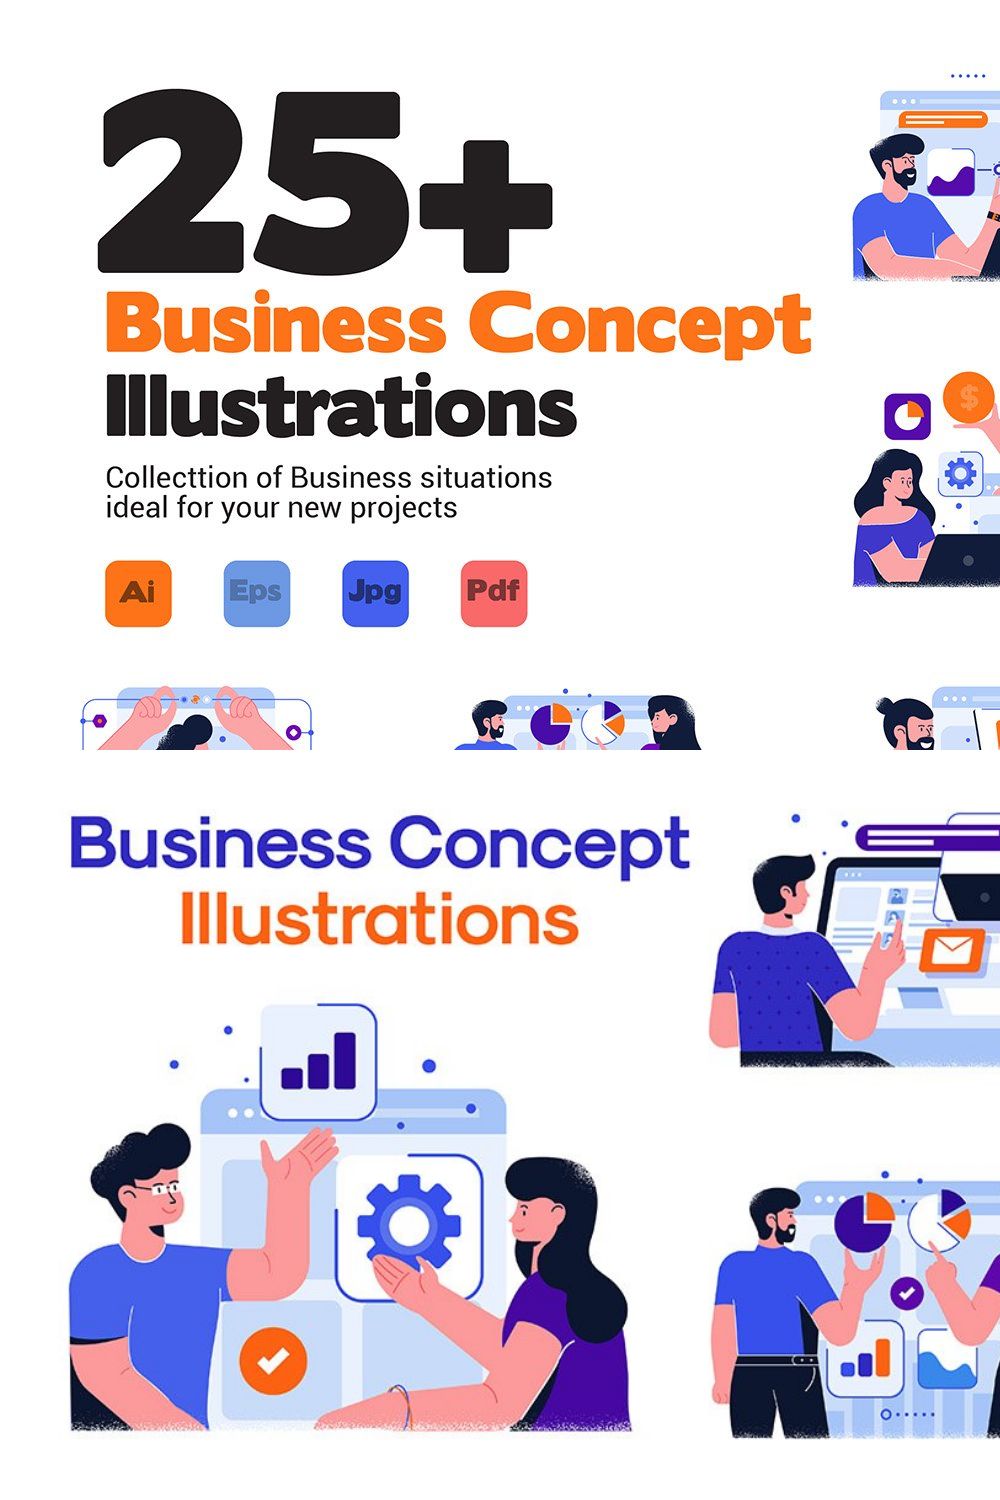 Business Concept illustrations pinterest preview image.